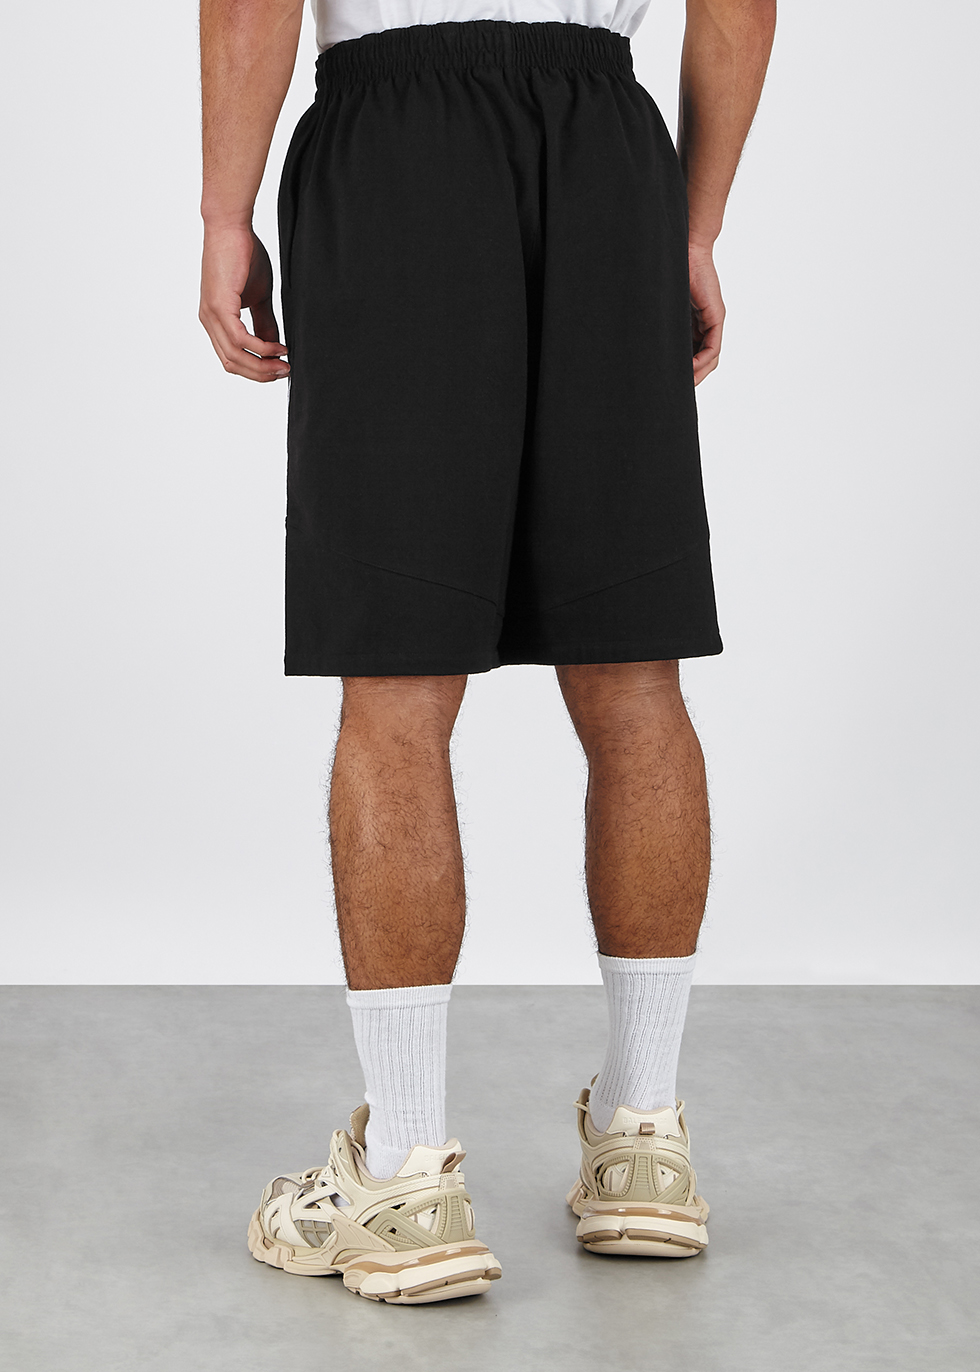 Black cotton shorts - Harvey Nichols